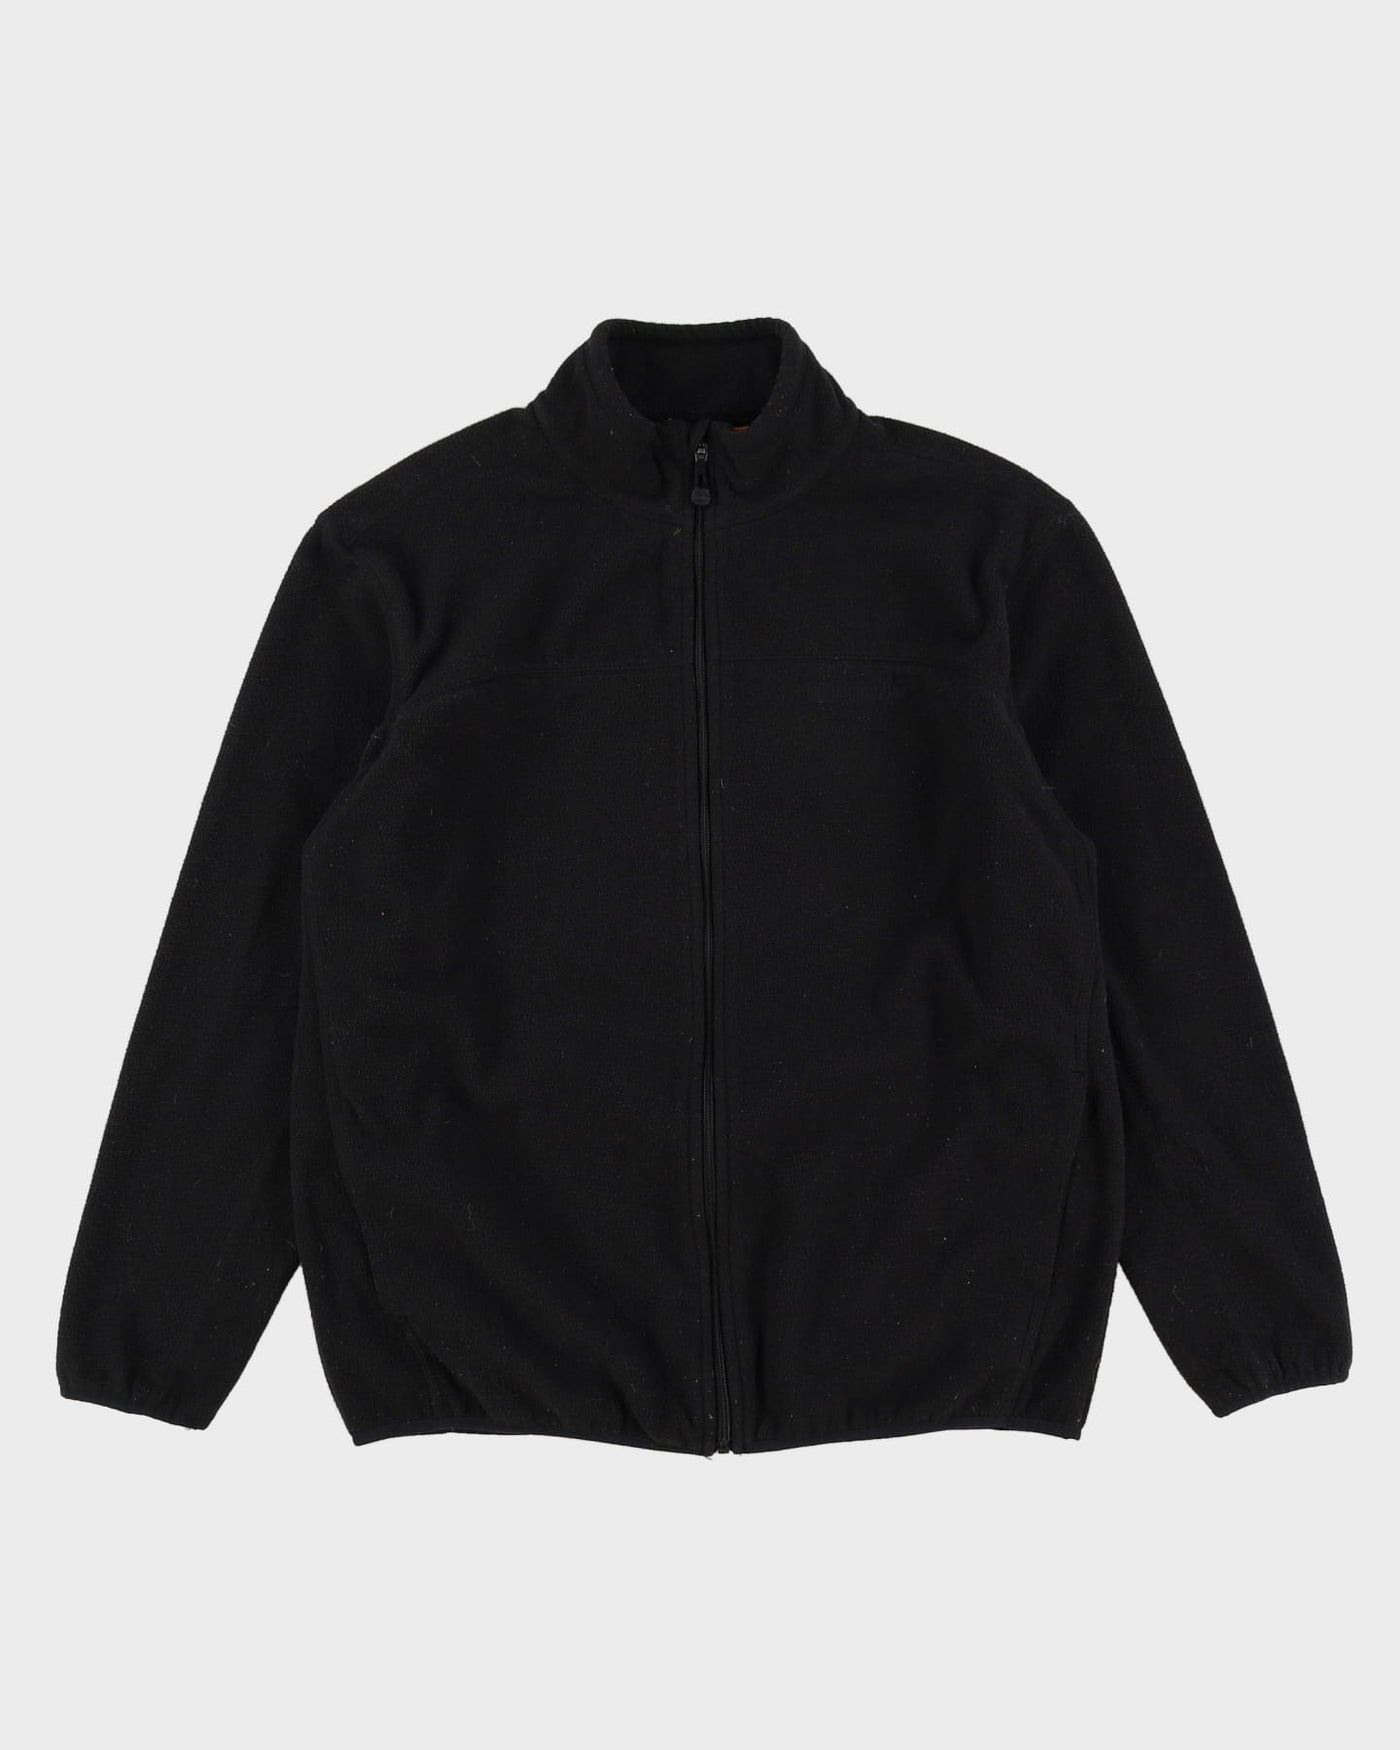 Timberland Black Full-Zip Fleece - XL